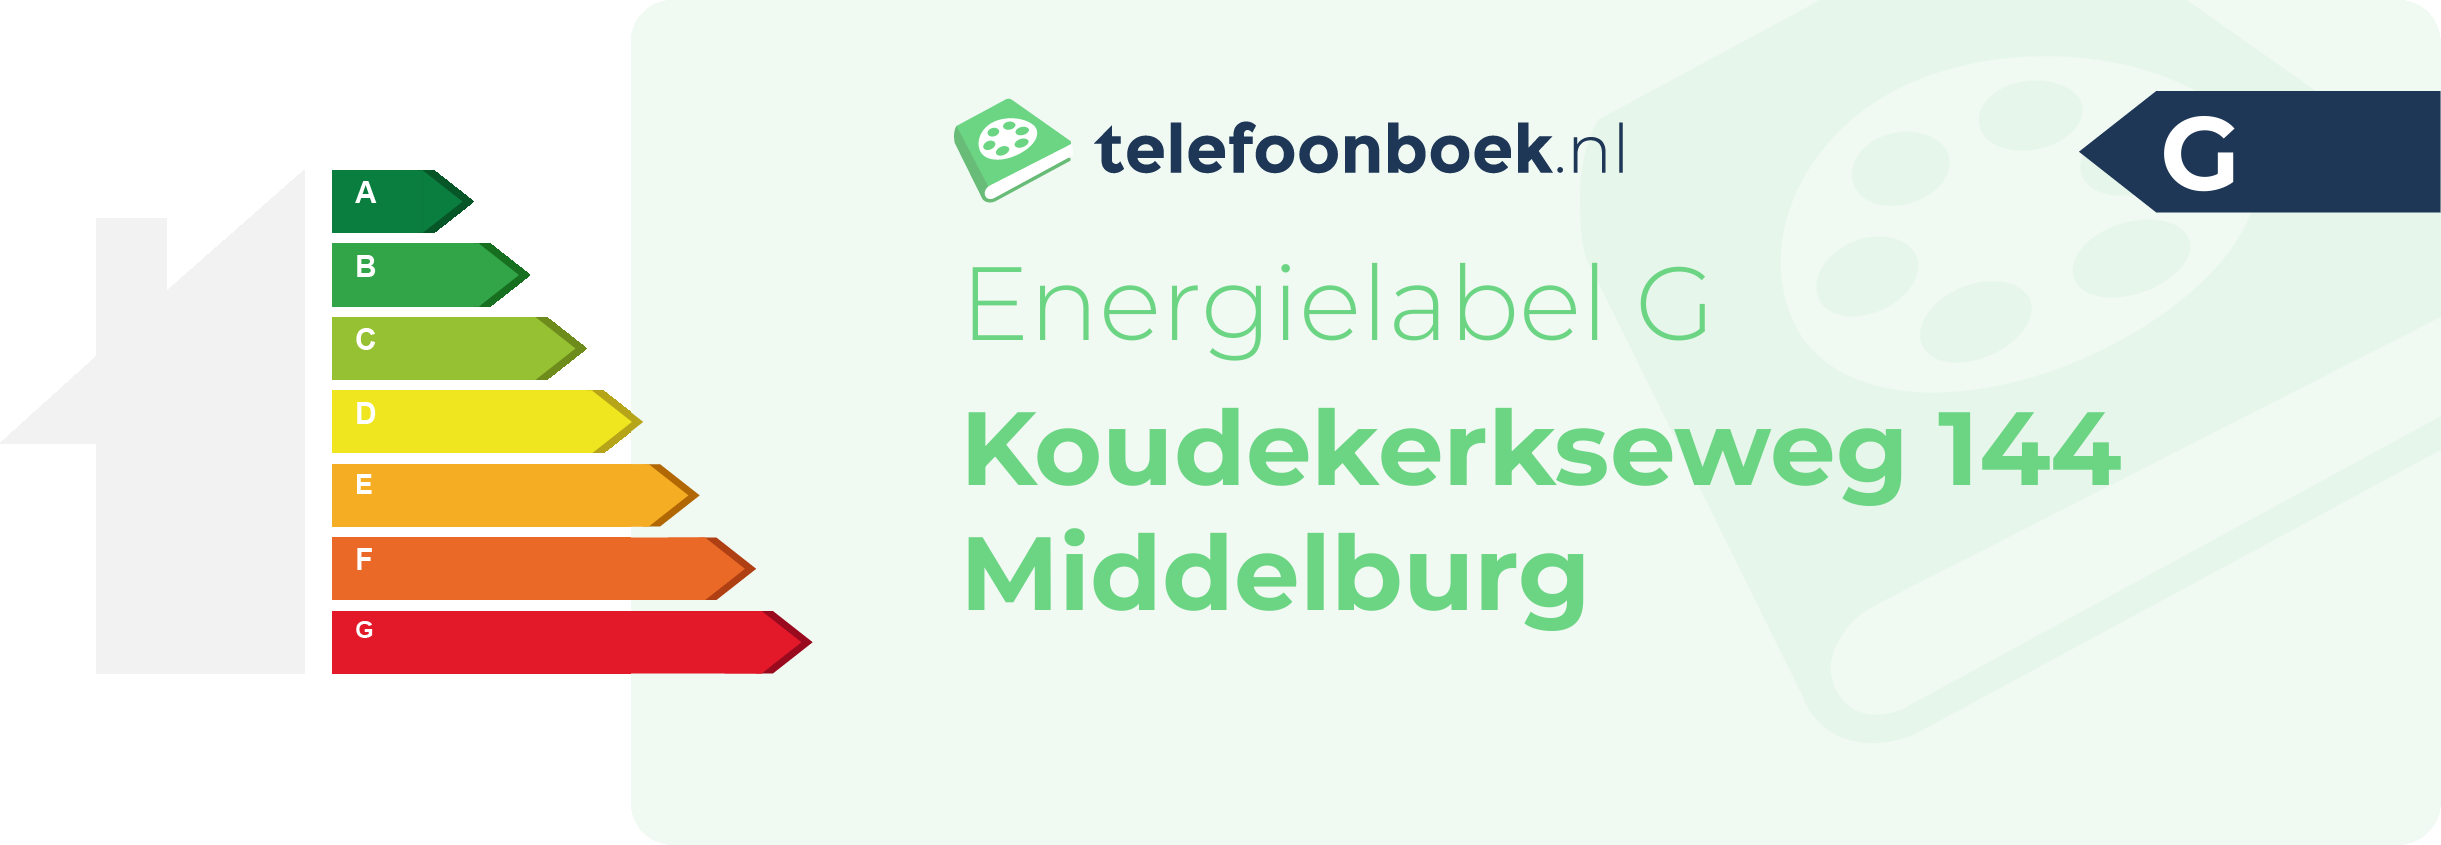 Energielabel Koudekerkseweg 144 Middelburg